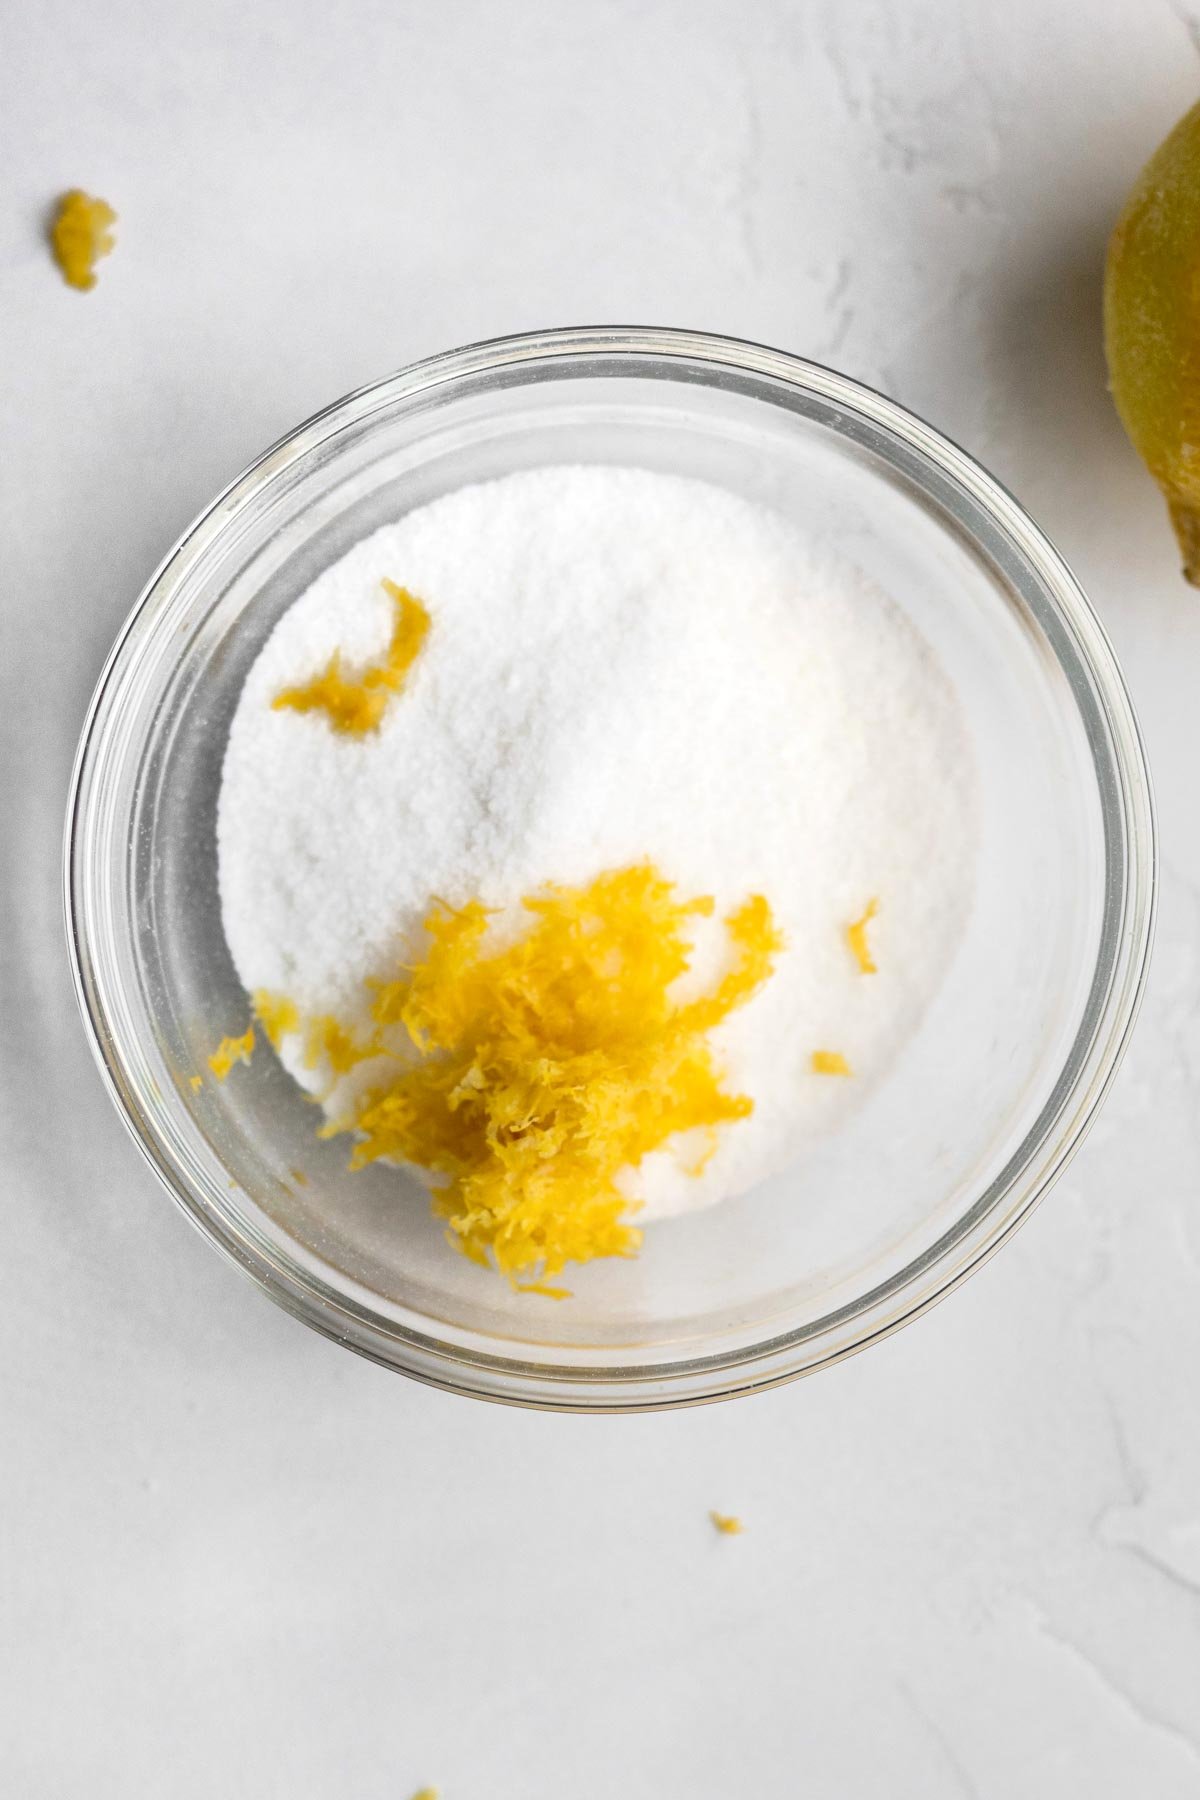 Lemon zest in a bowl of granulated sugar.